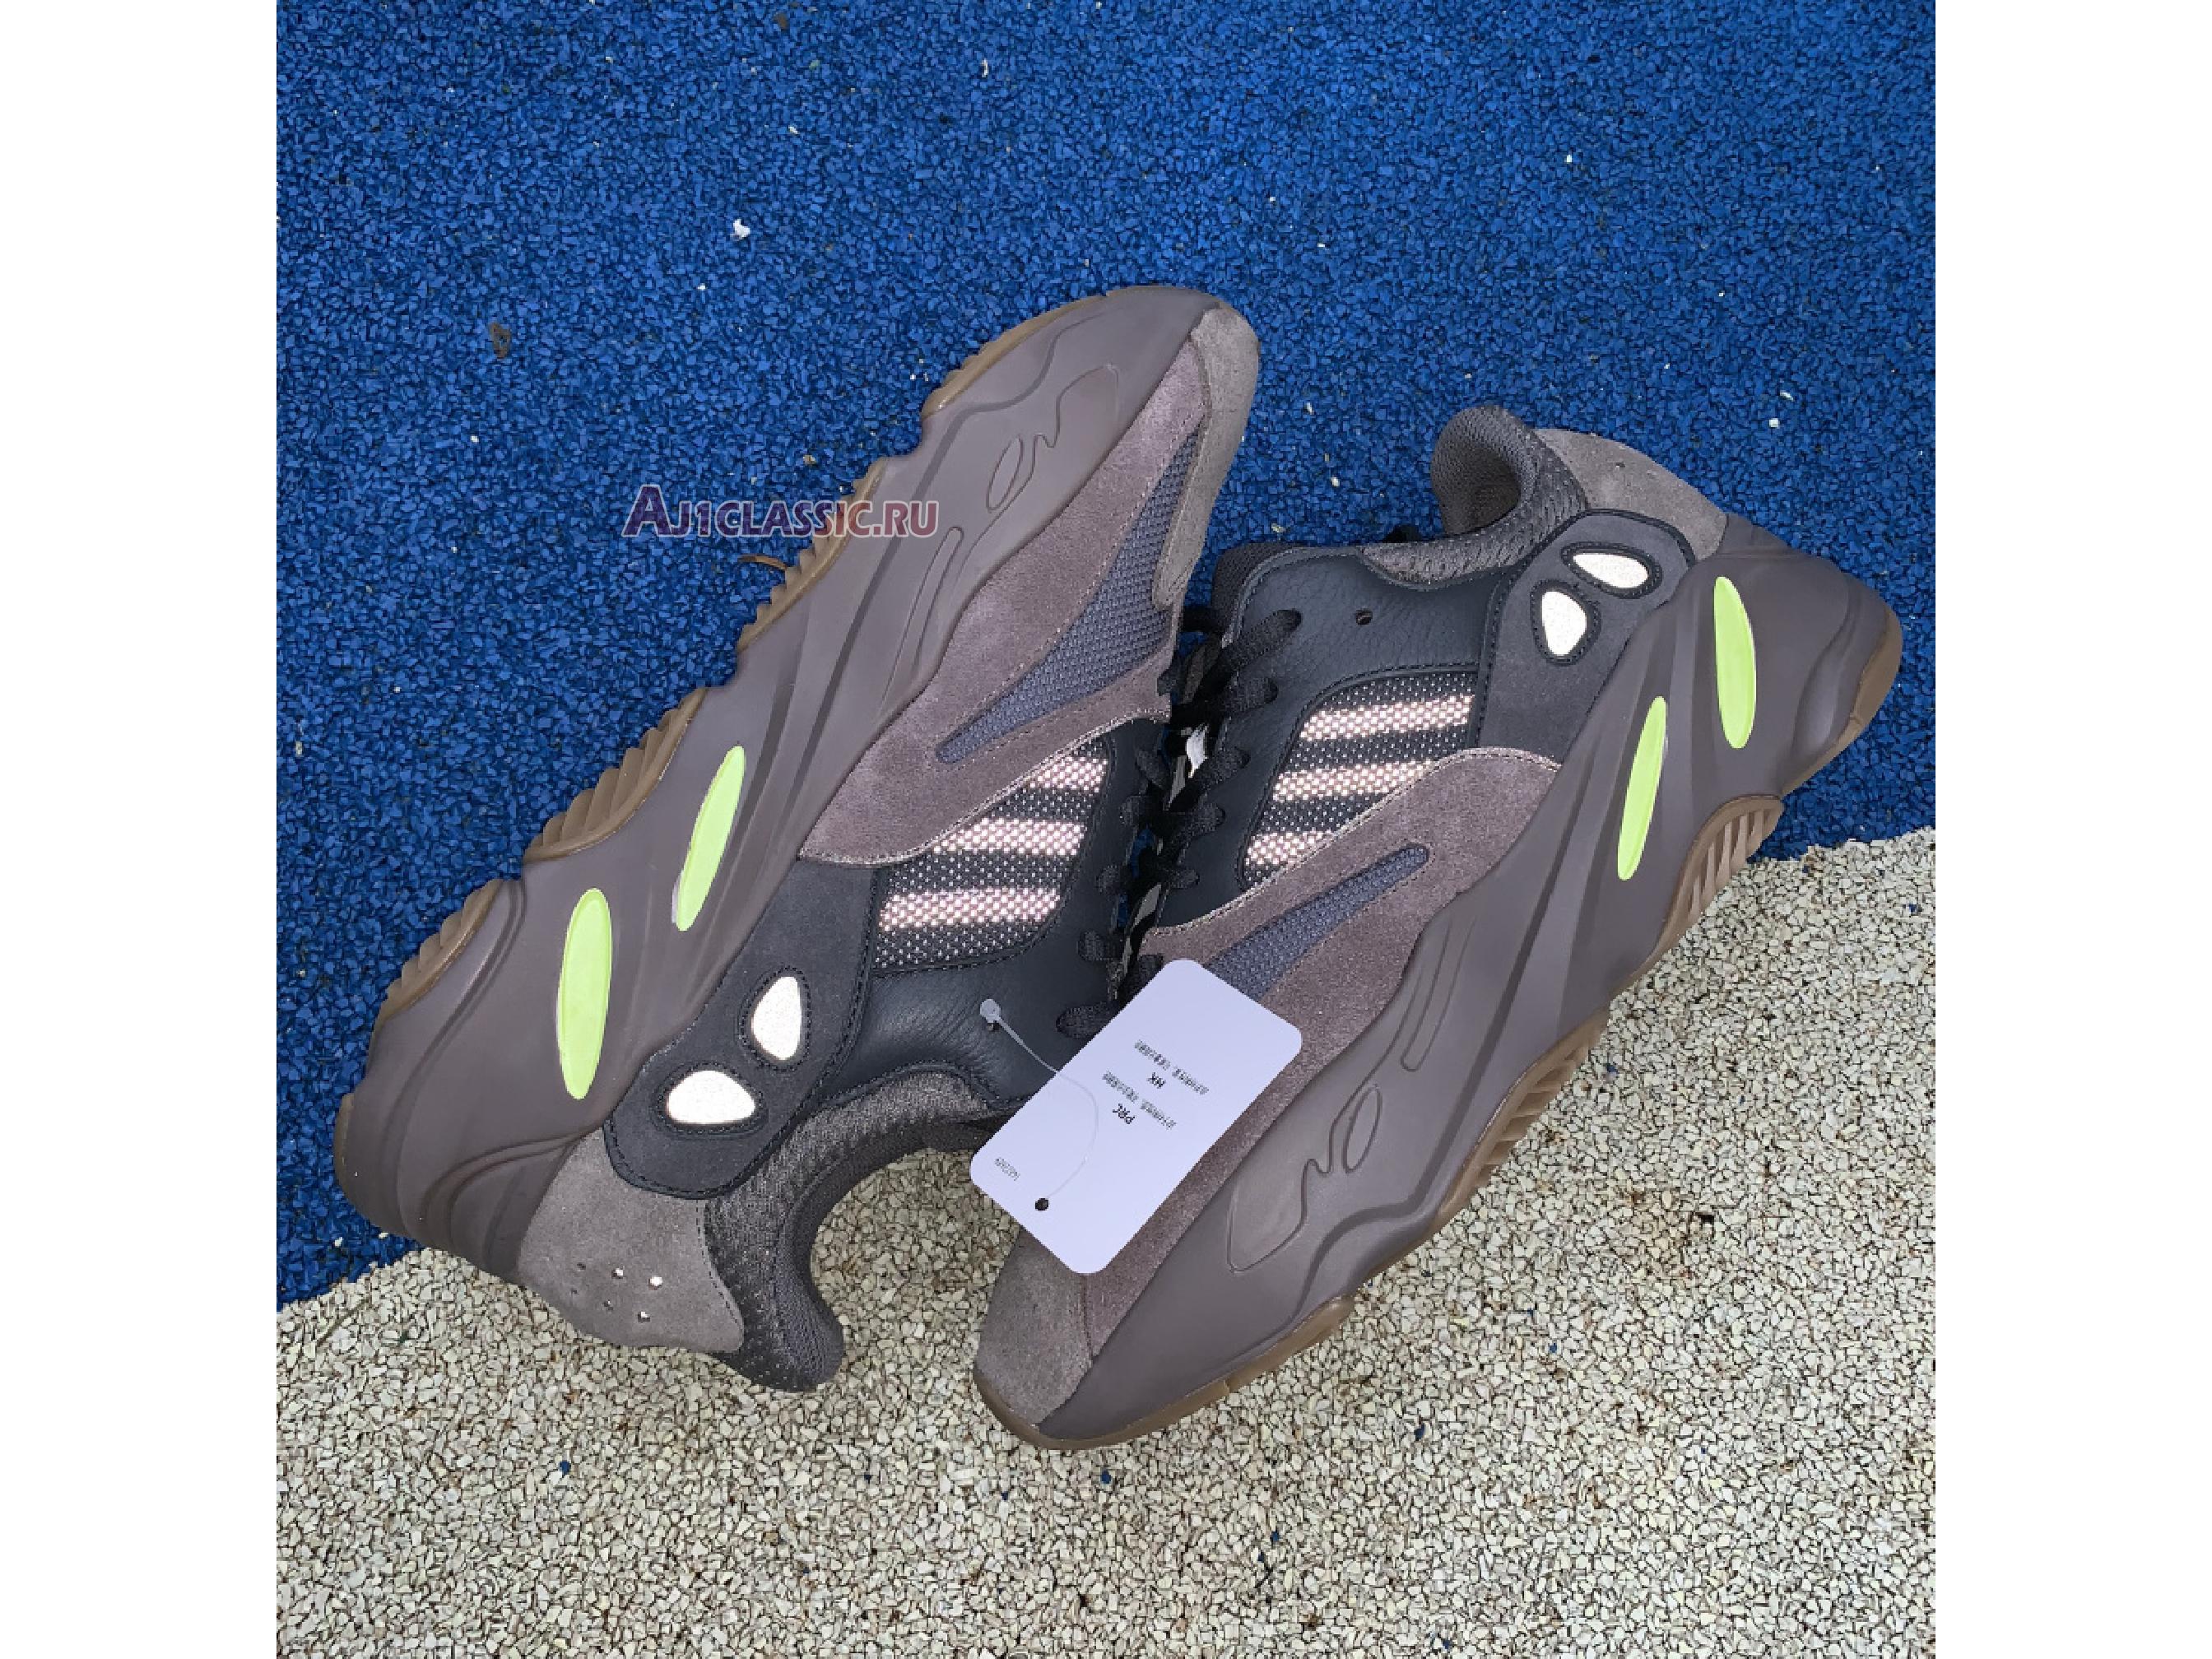 Adidas Yeezy Boost 700 "Mauve" EE9614